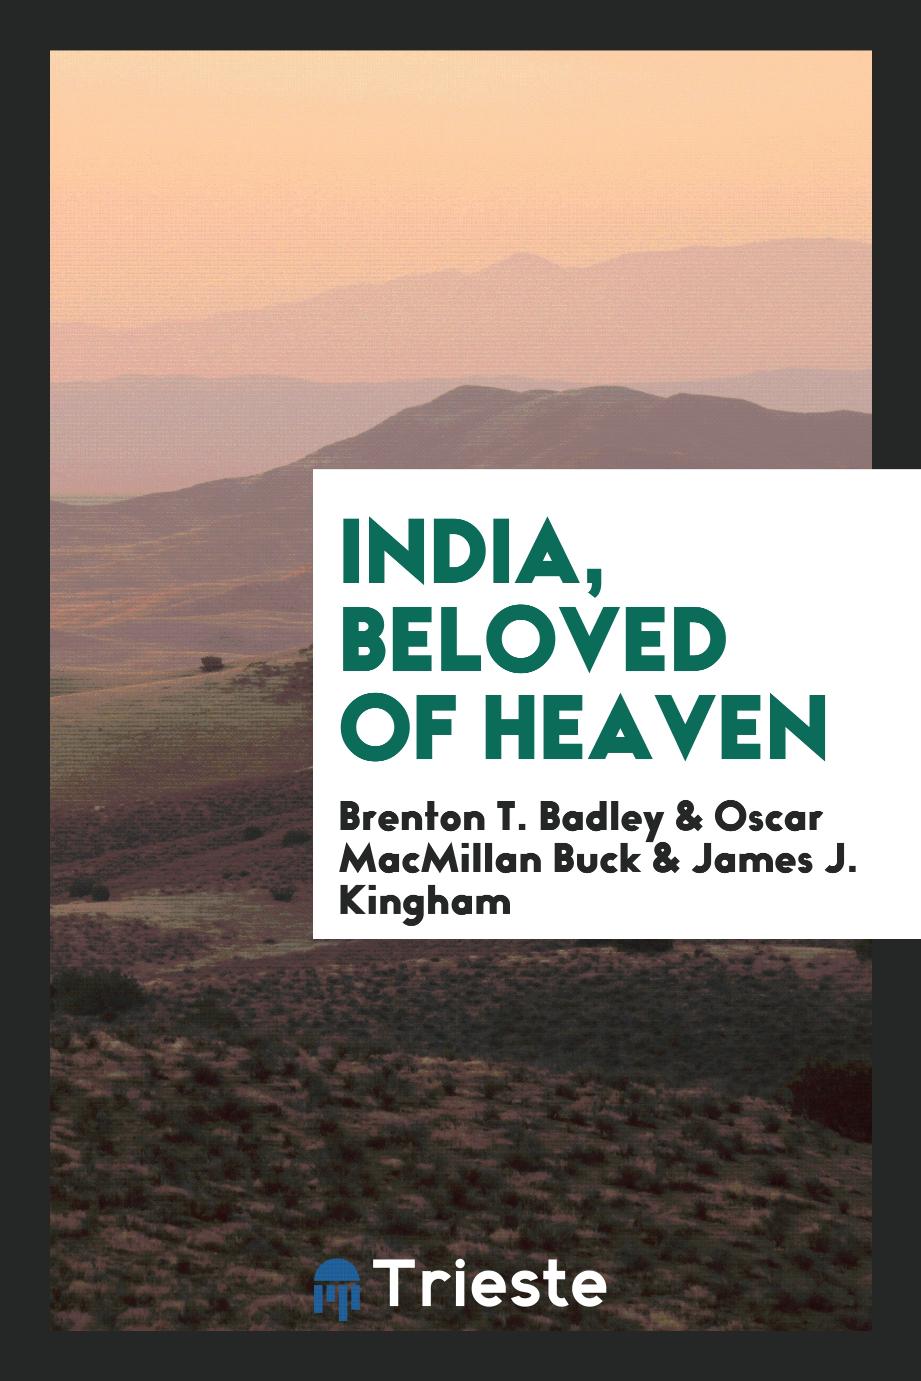 India, beloved of heaven